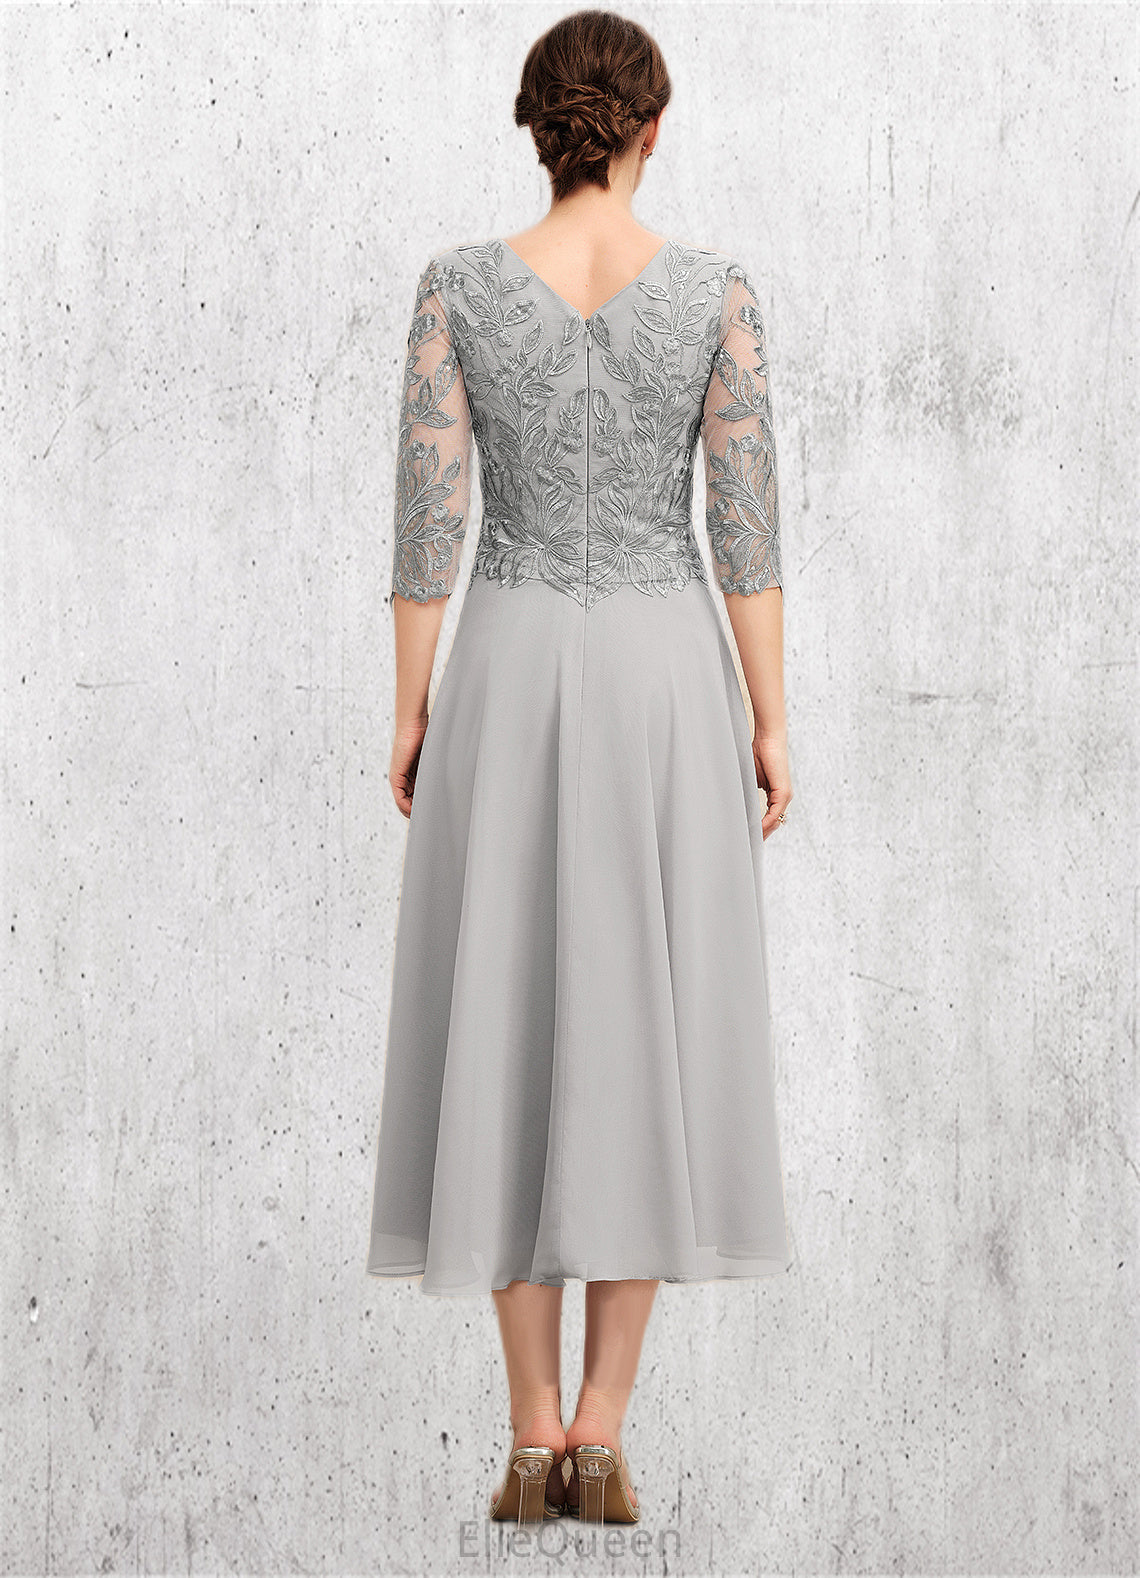 Viviana A-Line Scoop Neck Tea-Length Chiffon Lace Mother of the Bride Dress With Sequins DG126P0014580